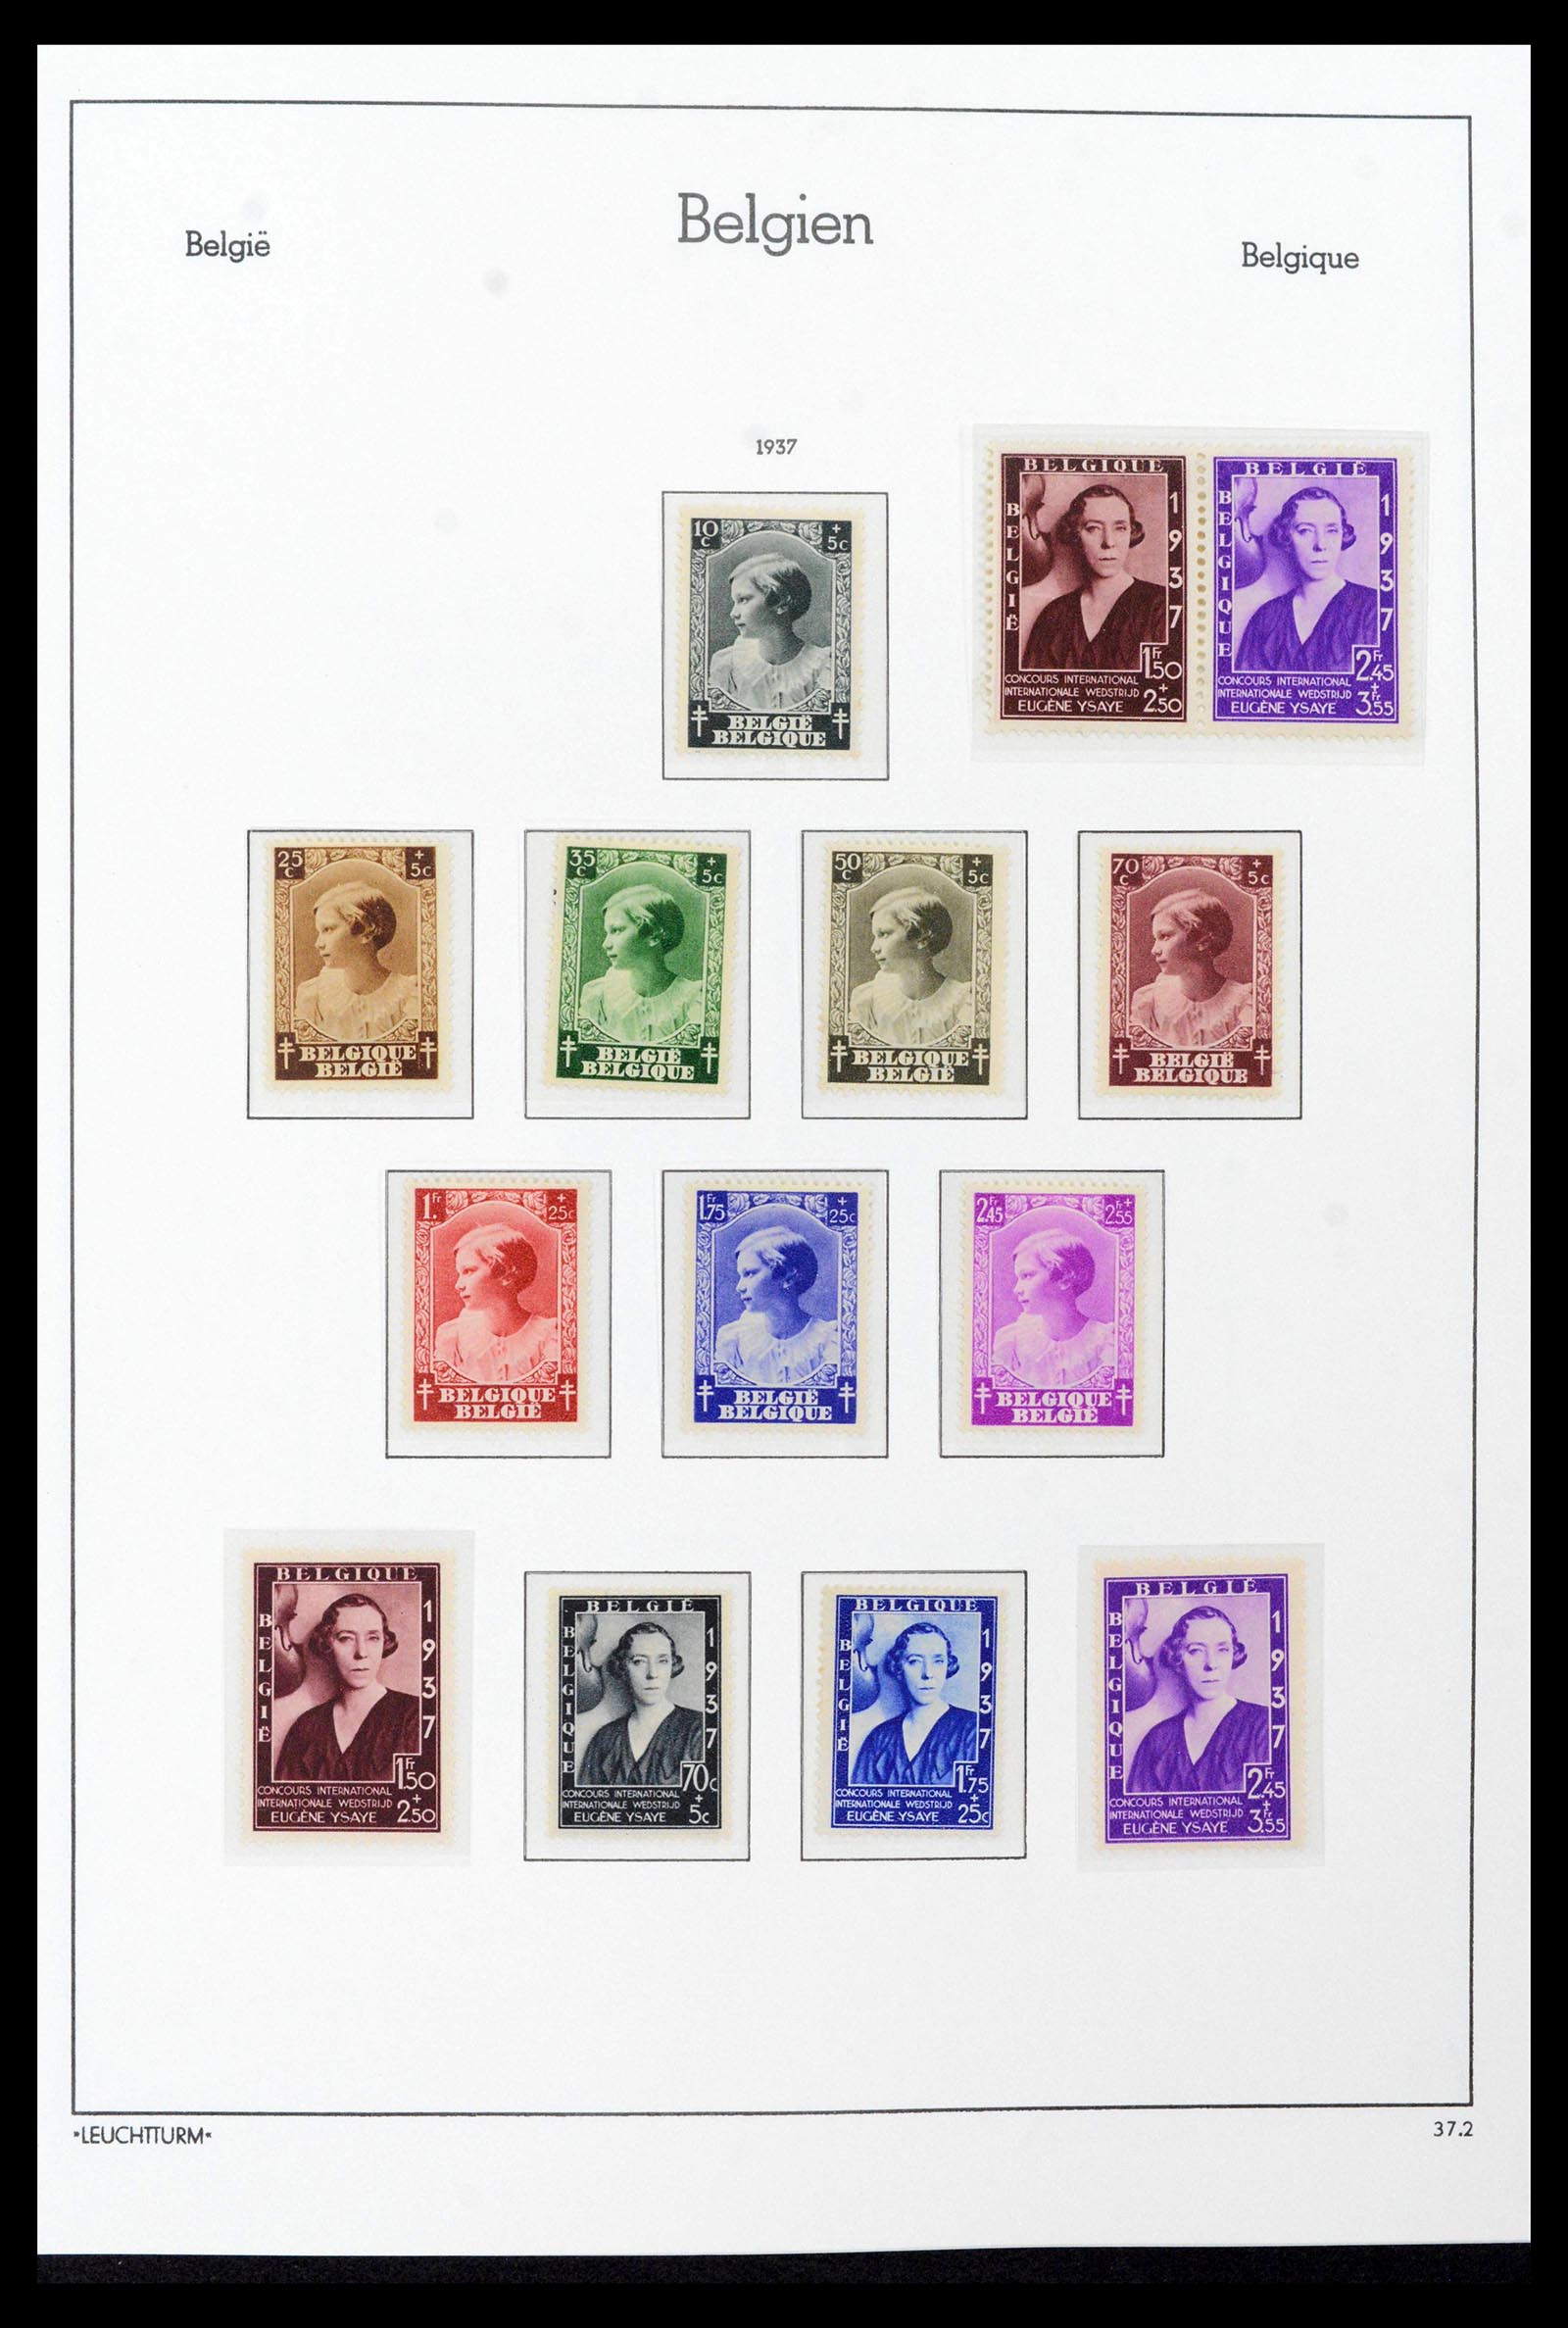 39137 0063 - Stamp collection 39137 Belgium 1849-2002.